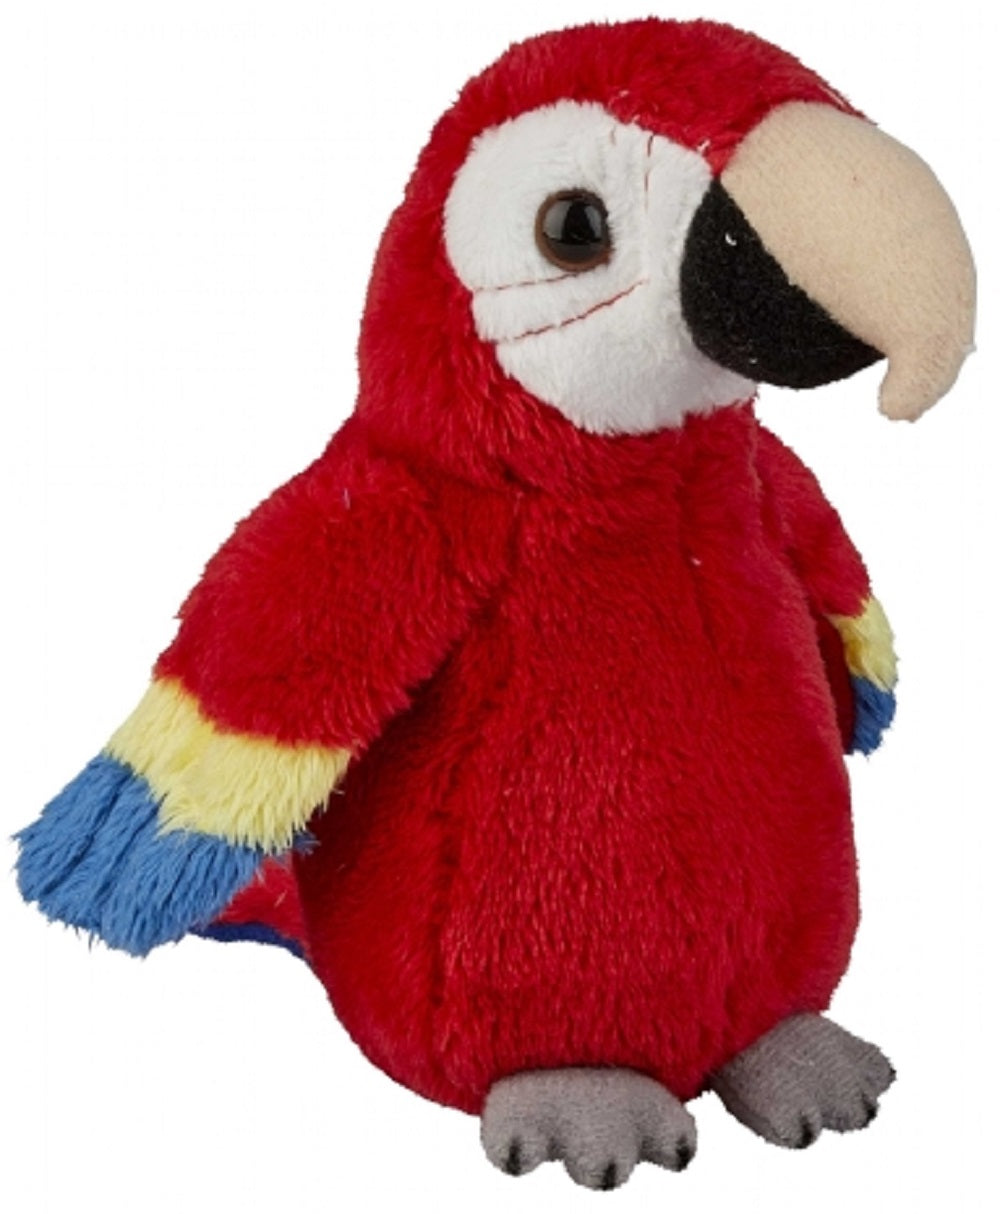 Ravensden Soft Toy Scarlet Macaw Parrot 15cm